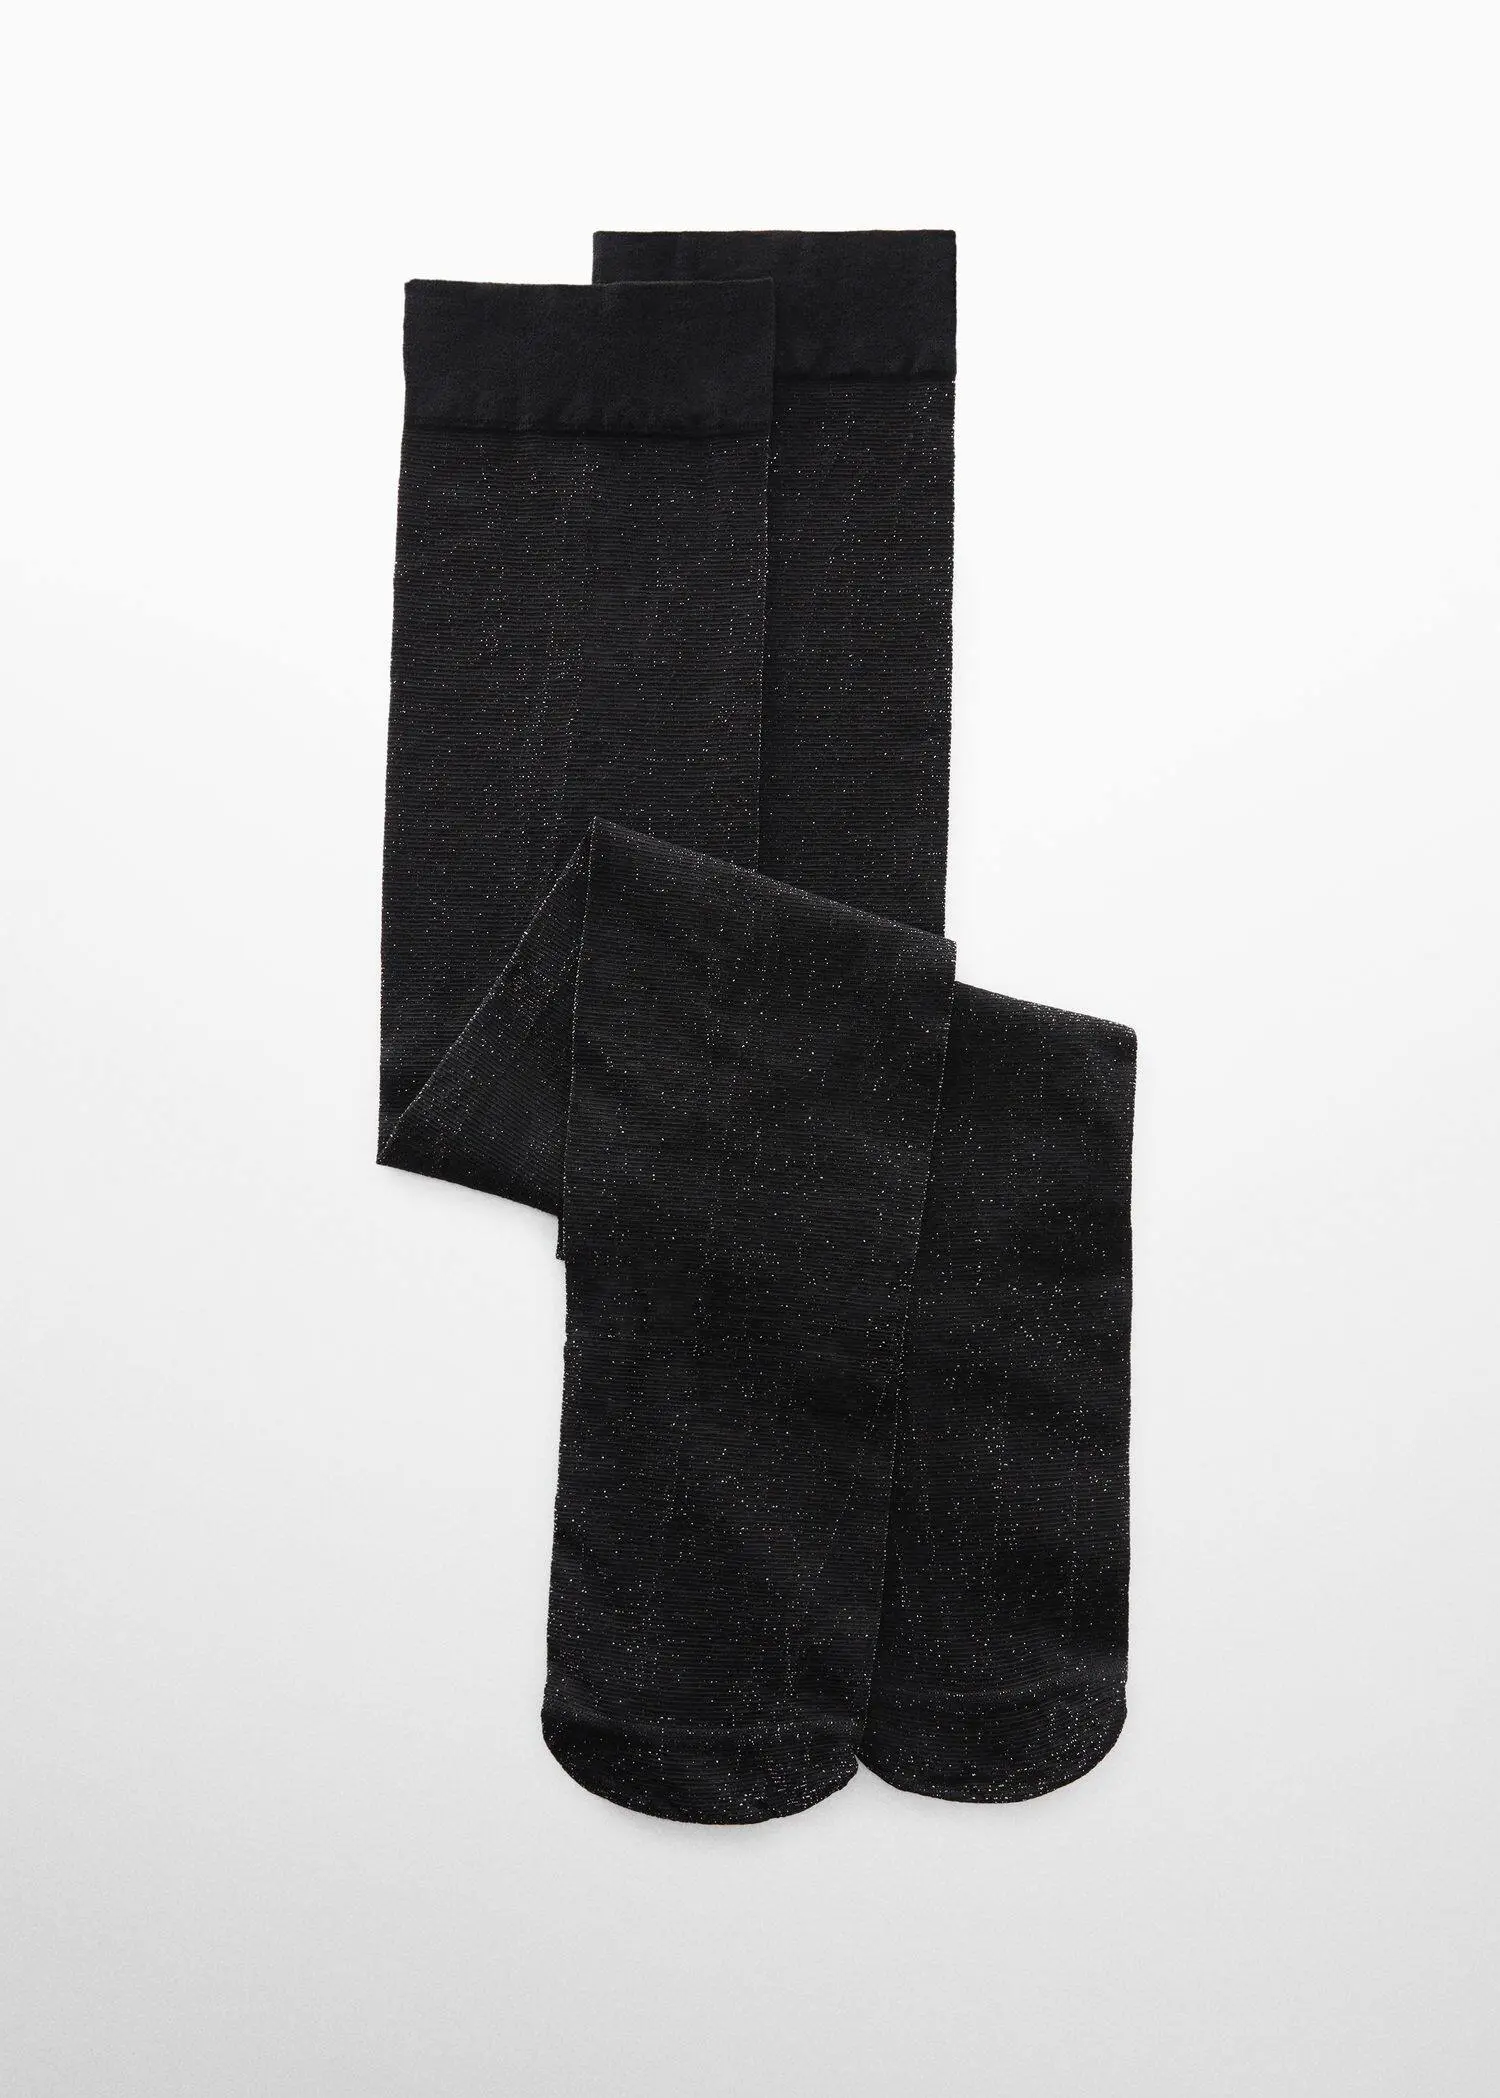 Mango Lurex long socks. 1